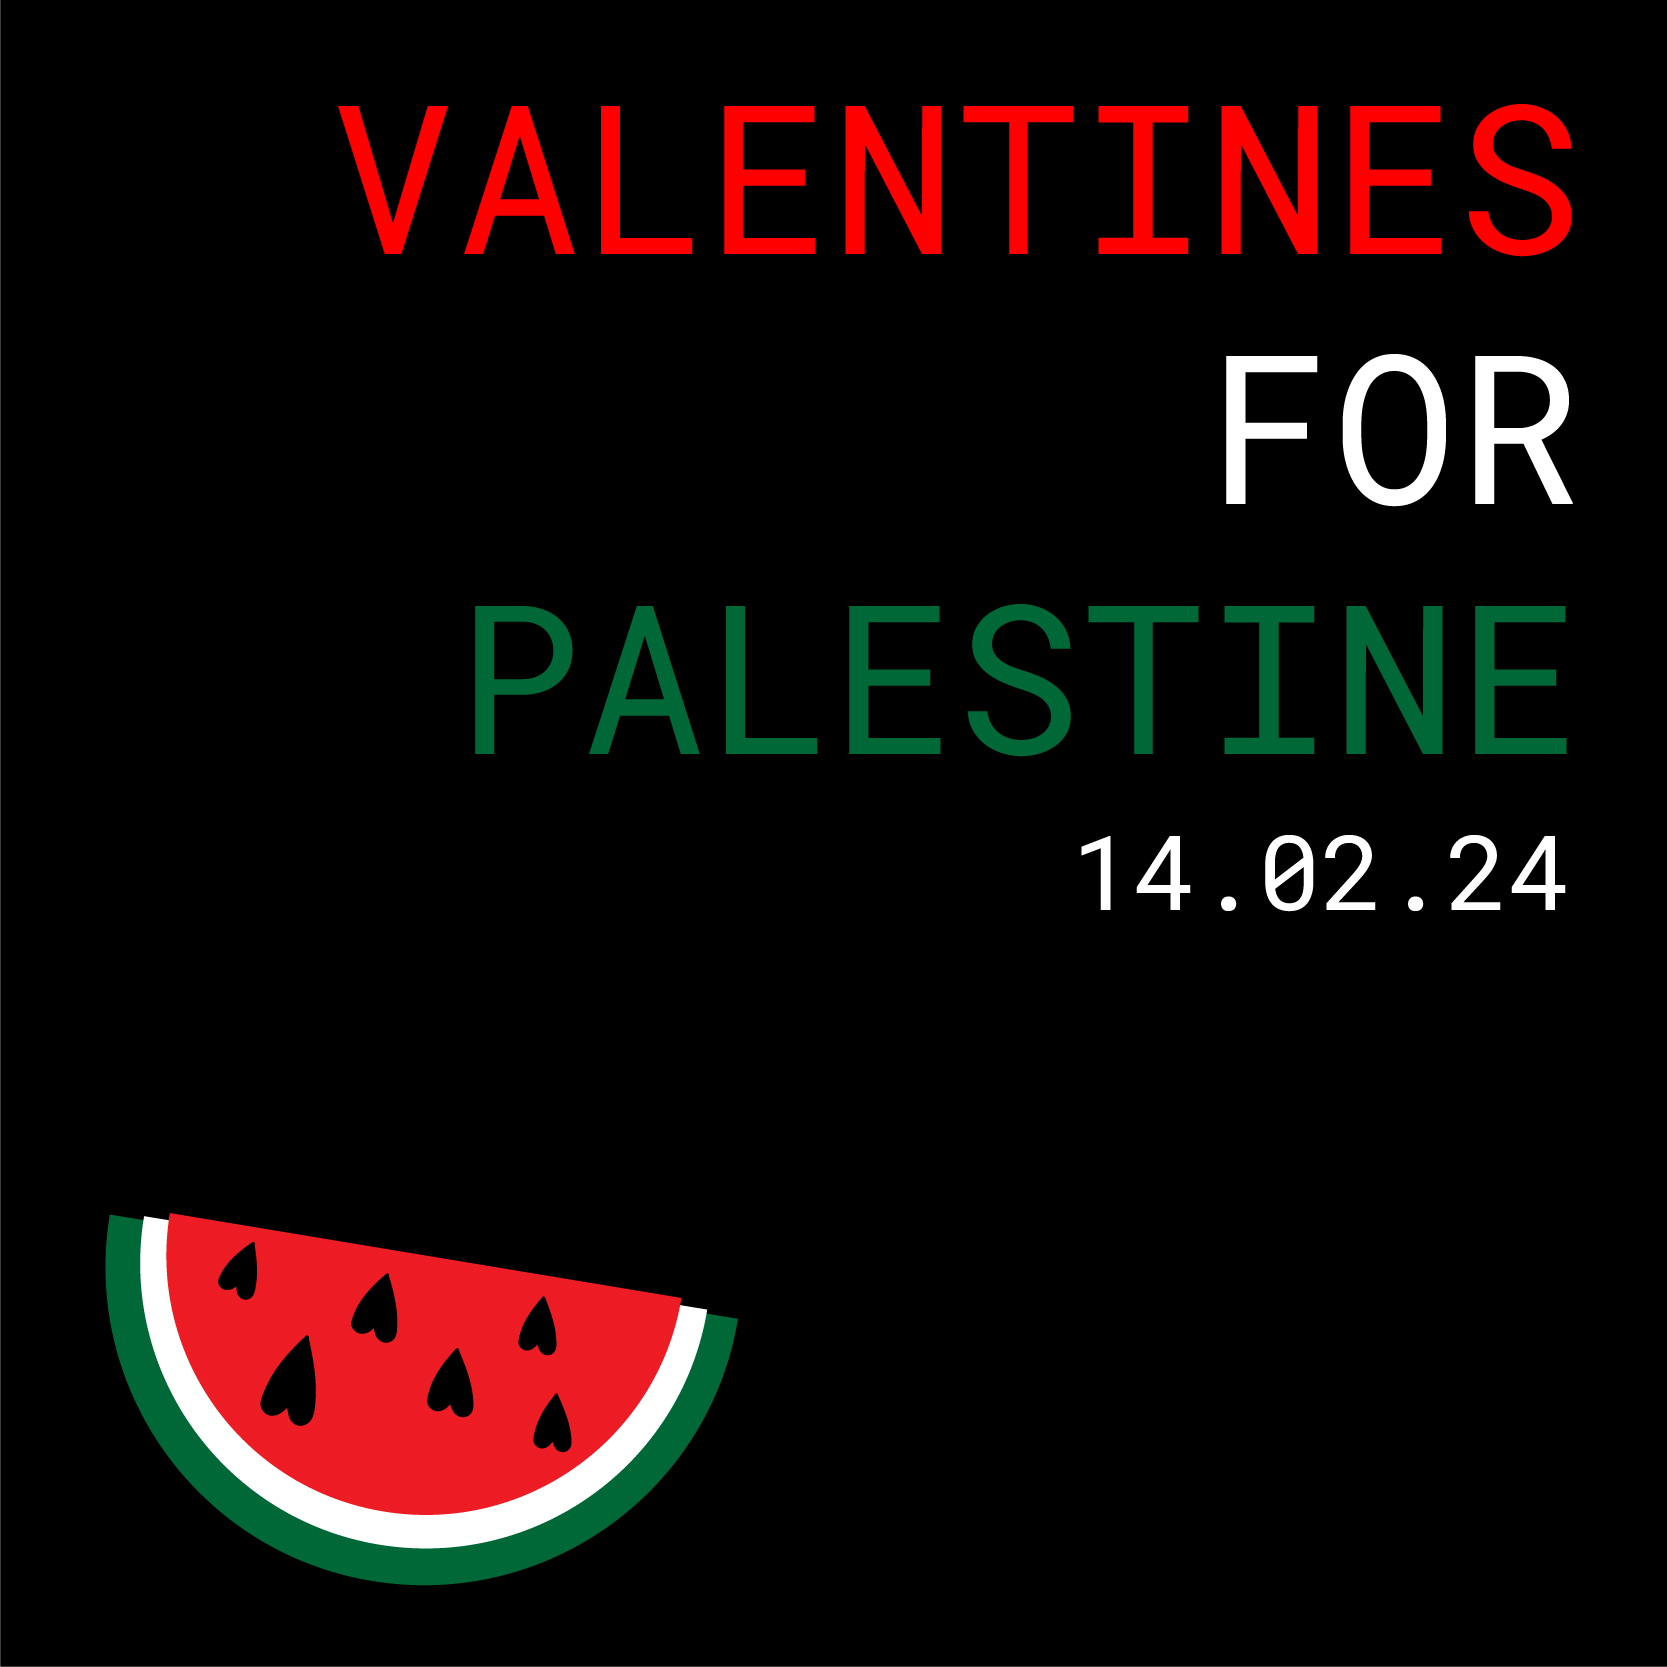 News: Donate Now to #Valentines4Palestine Fundraiser